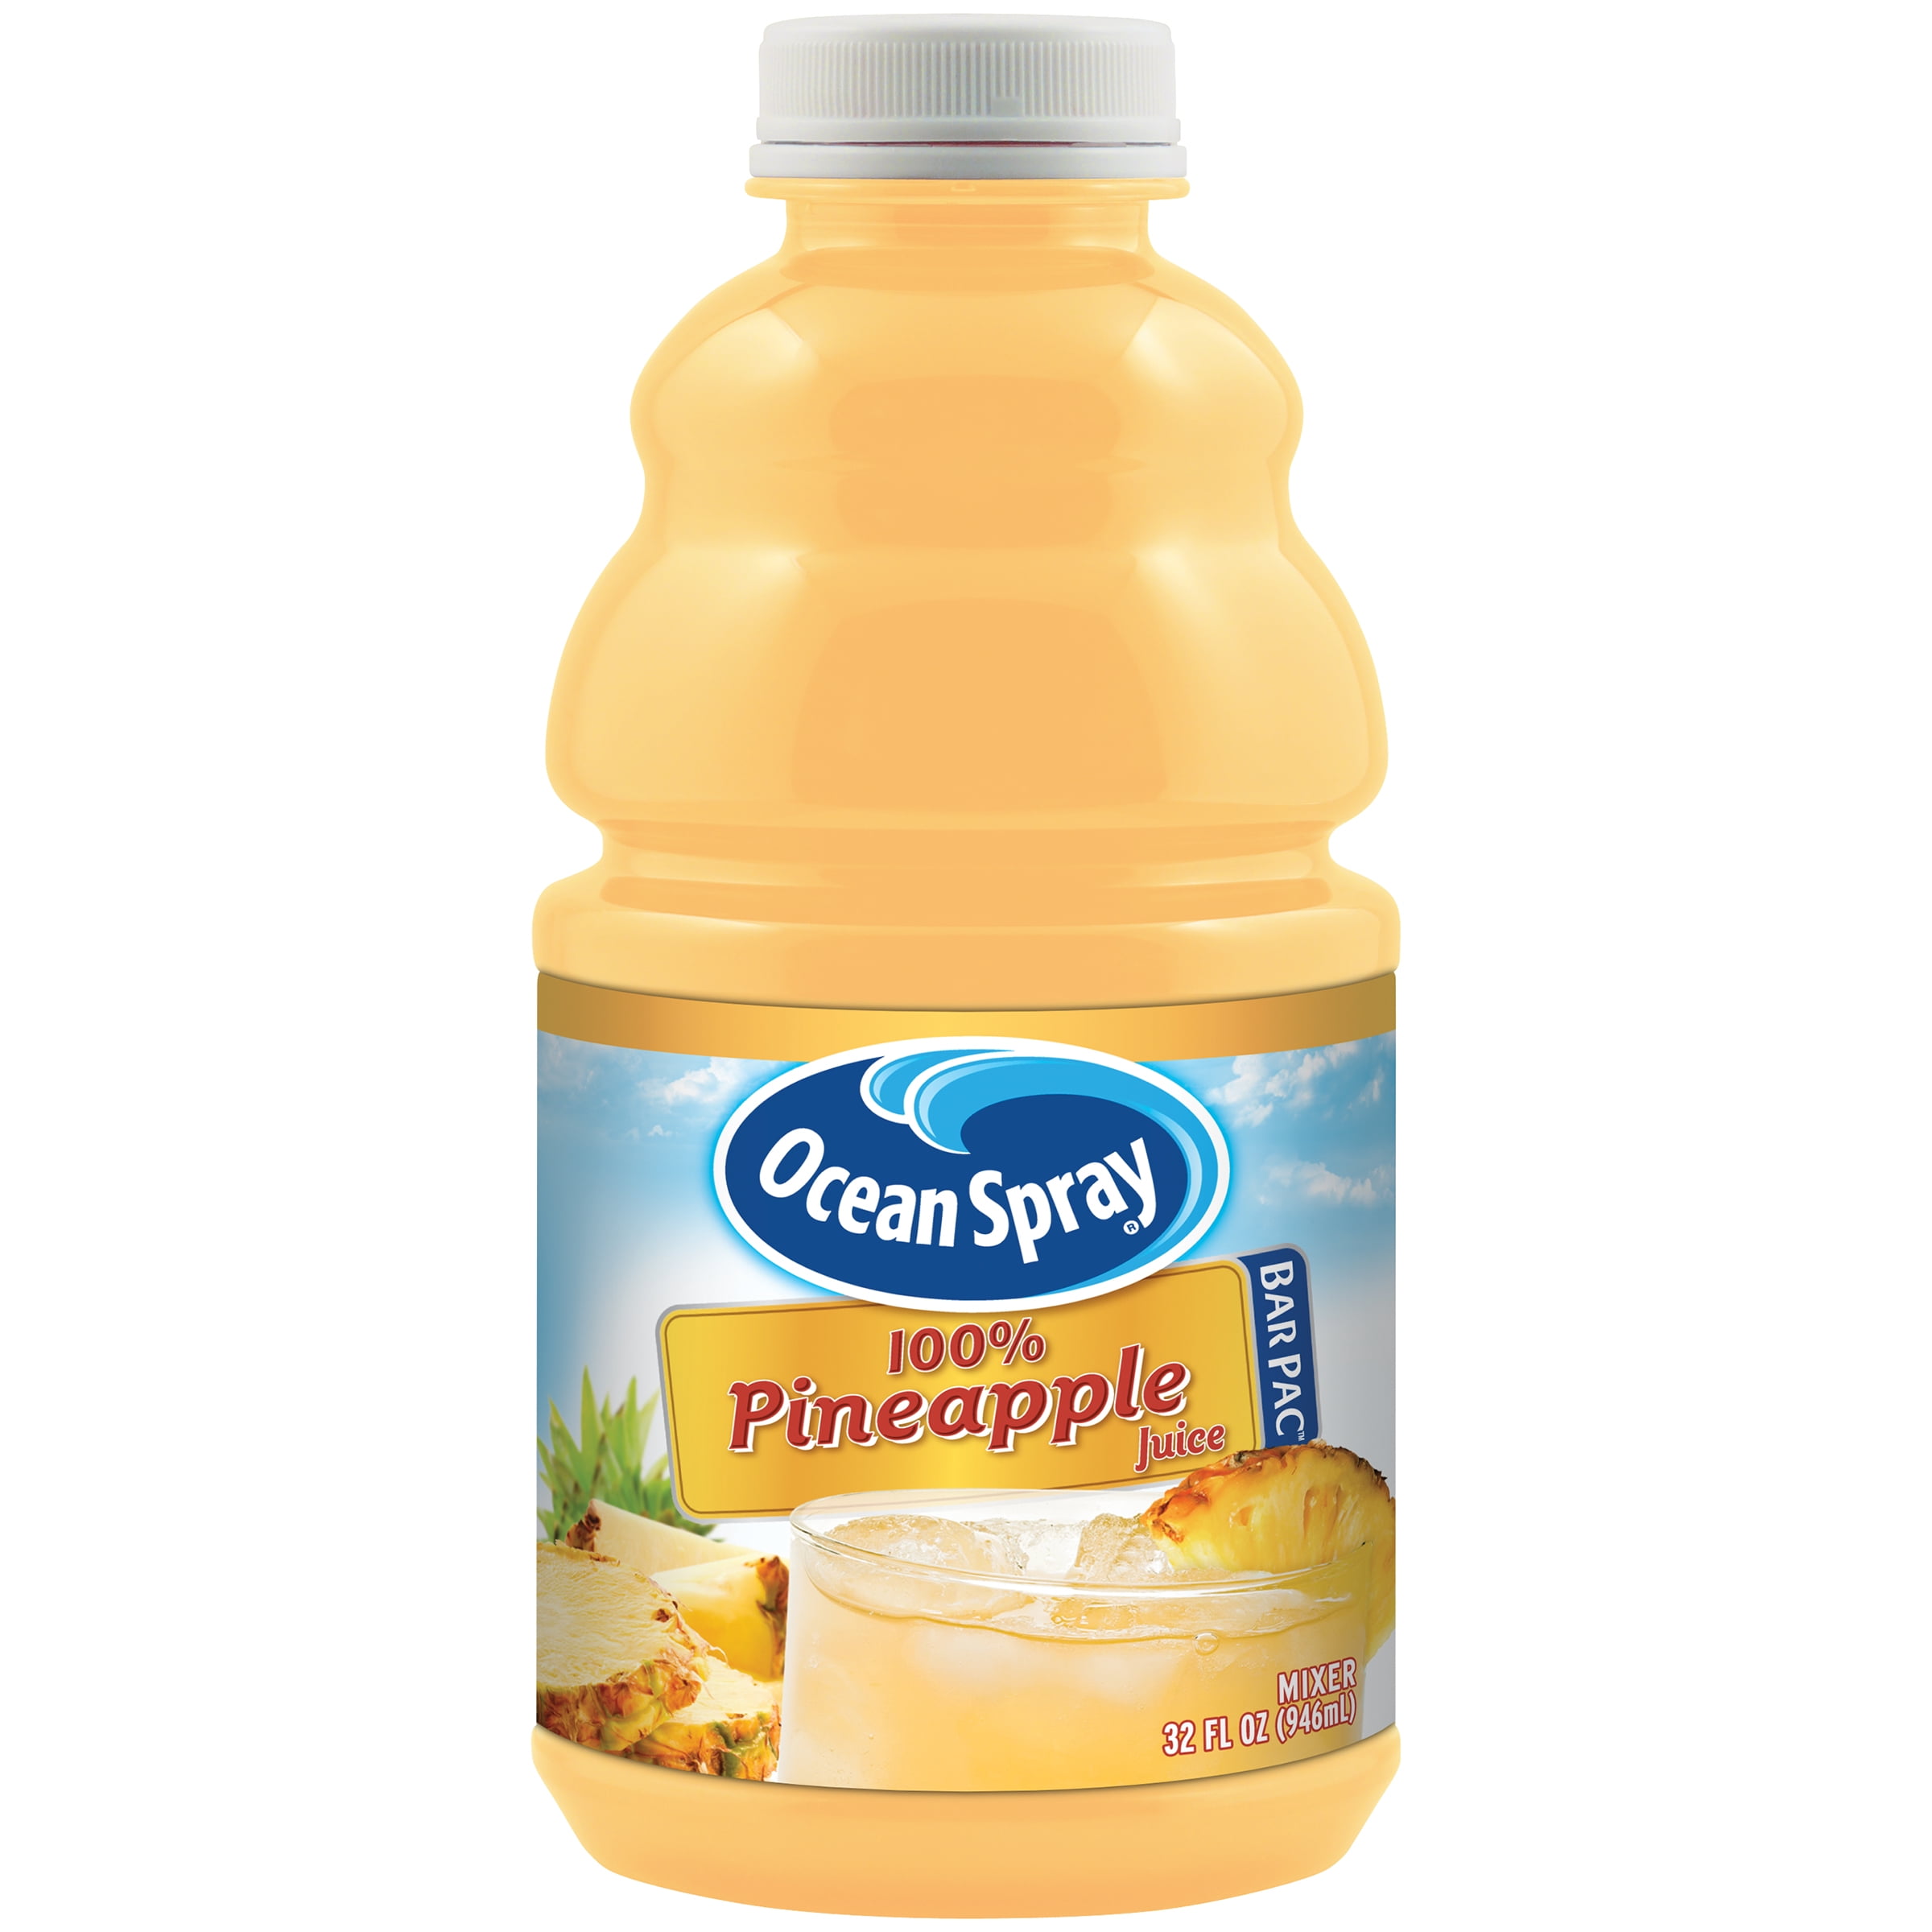 Ocean Spray 100 Pineapple Juice, 32 fl oz